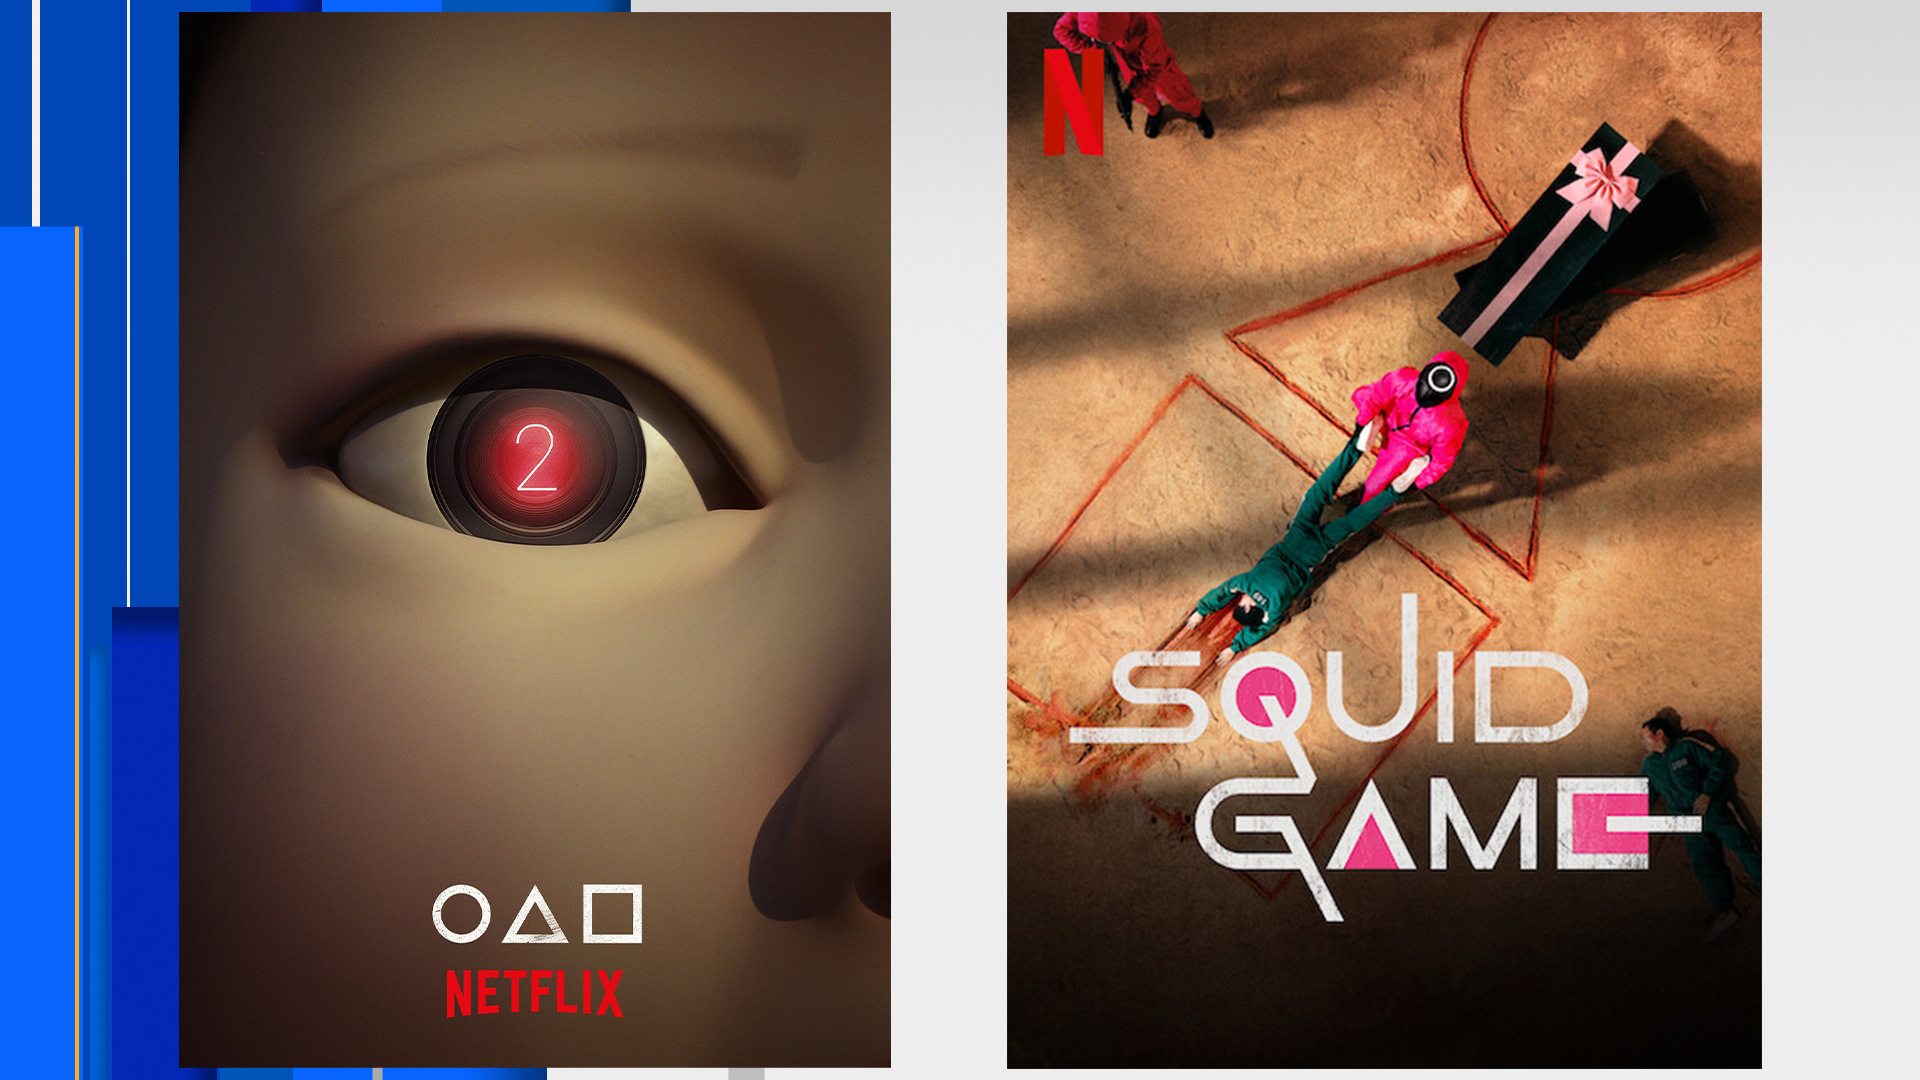 SQUID GAME. SEASON 2. OCTOBER 31. - Netflix Daily Updates